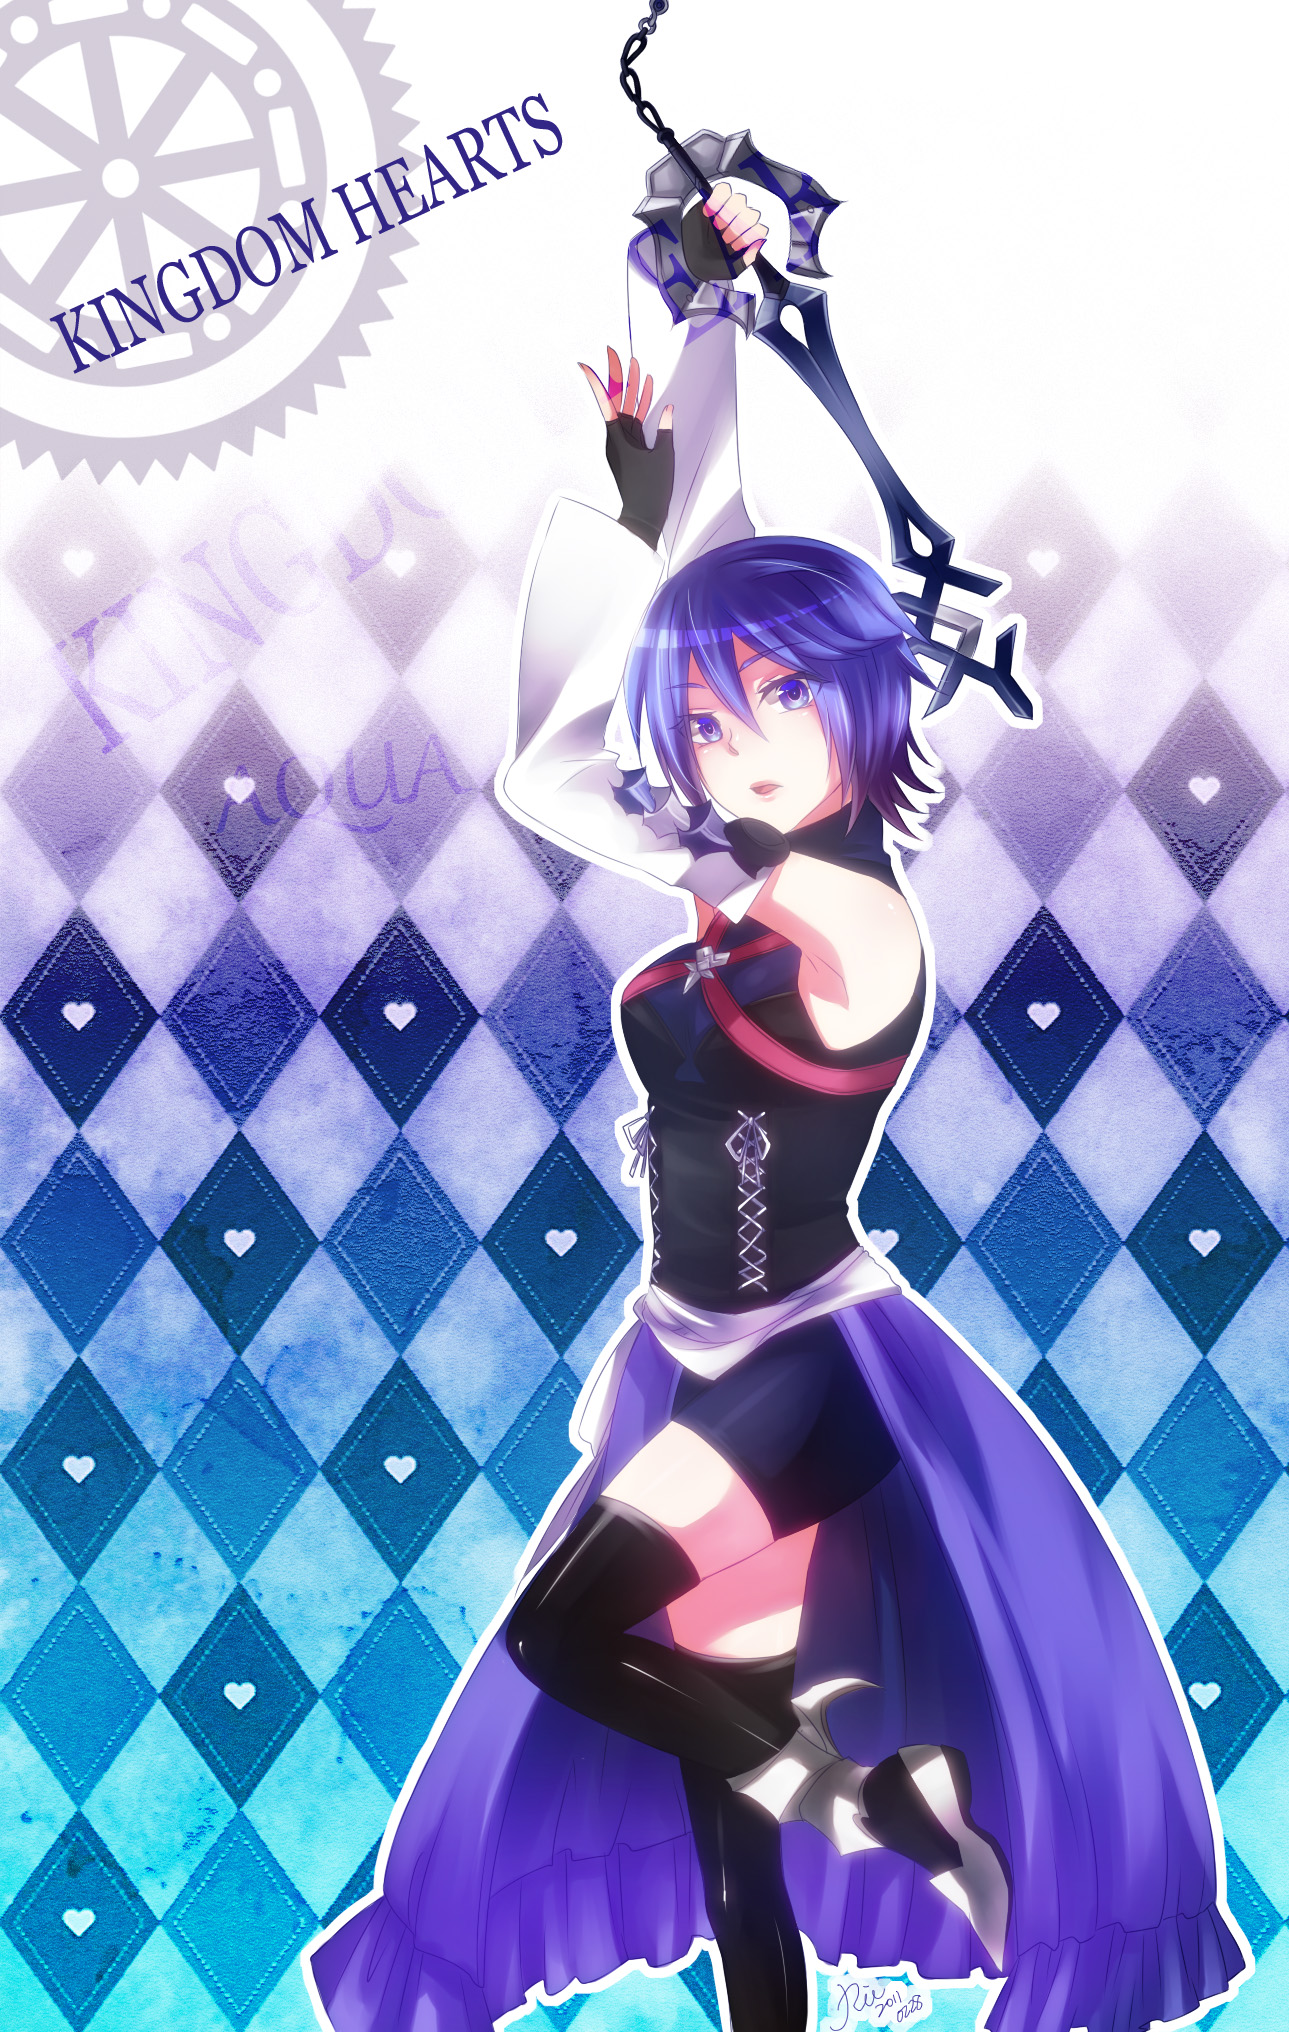 Aqua (Kingdom Hearts), Mobile Wallpaper. Anime Image Board